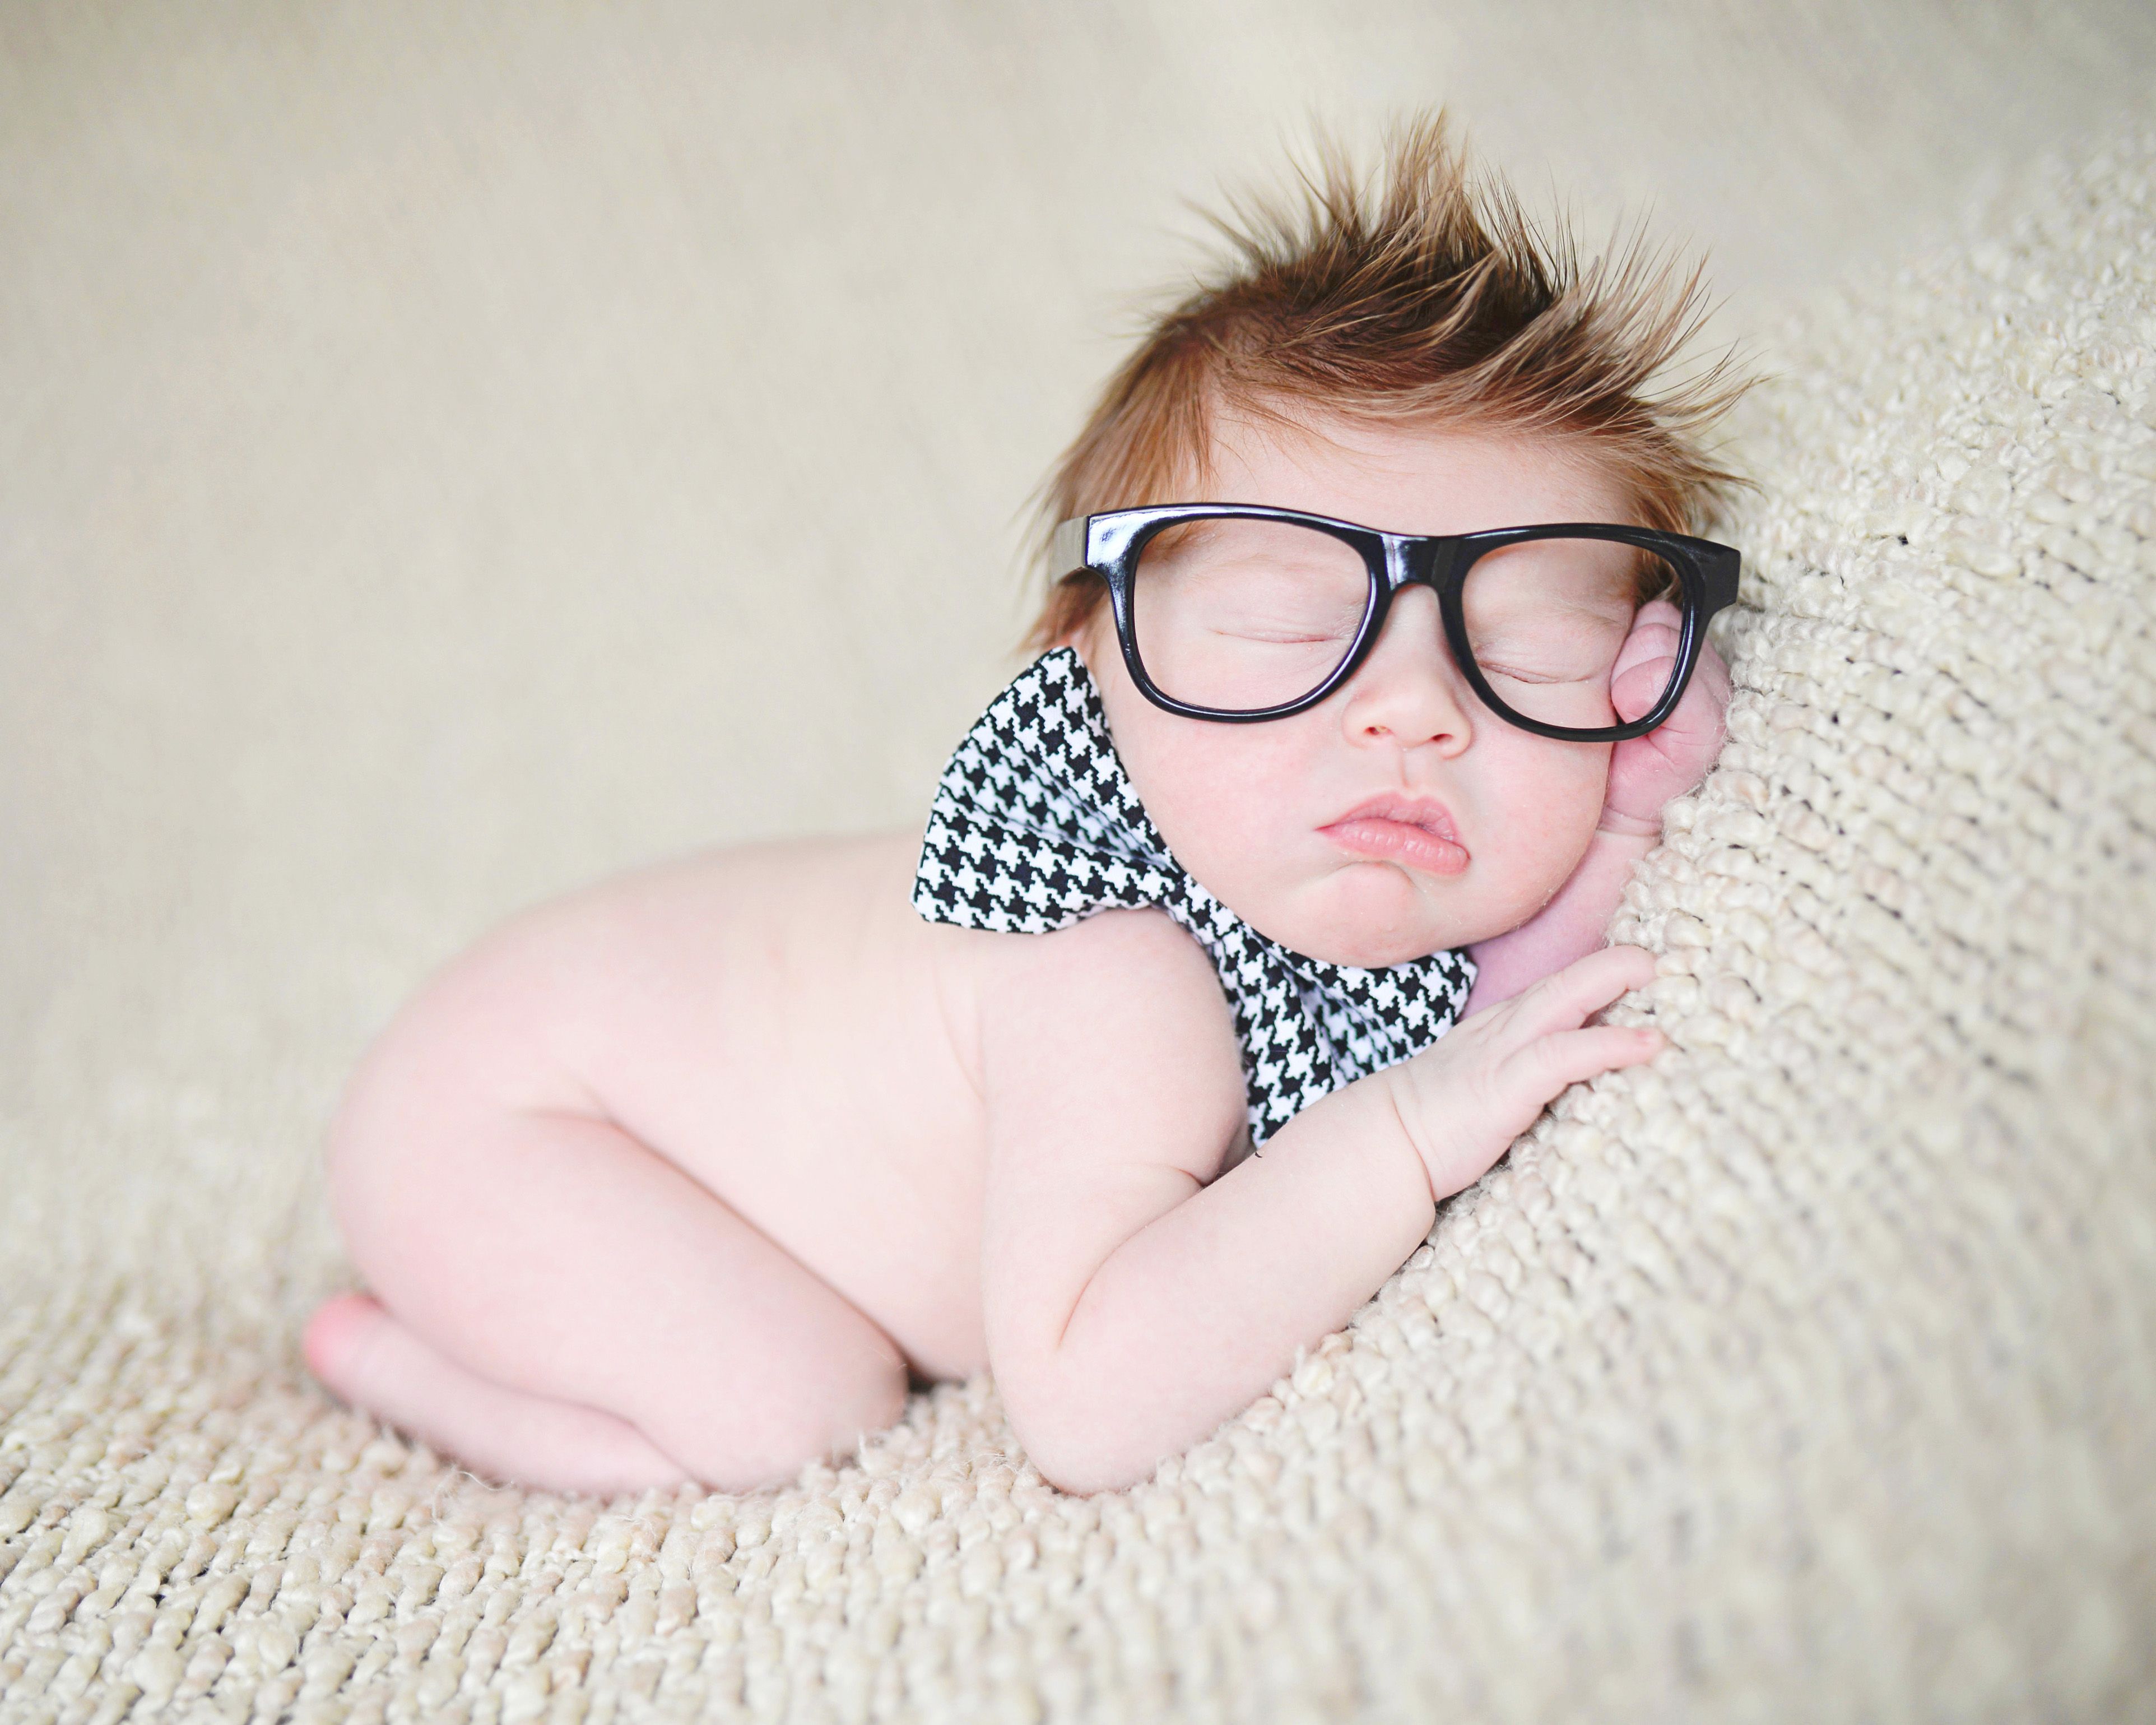 Newborn Baby Boy Portrait Picture for Wallpaper Wallpaper. Wallpaper Download. High Resolution Wallpaper